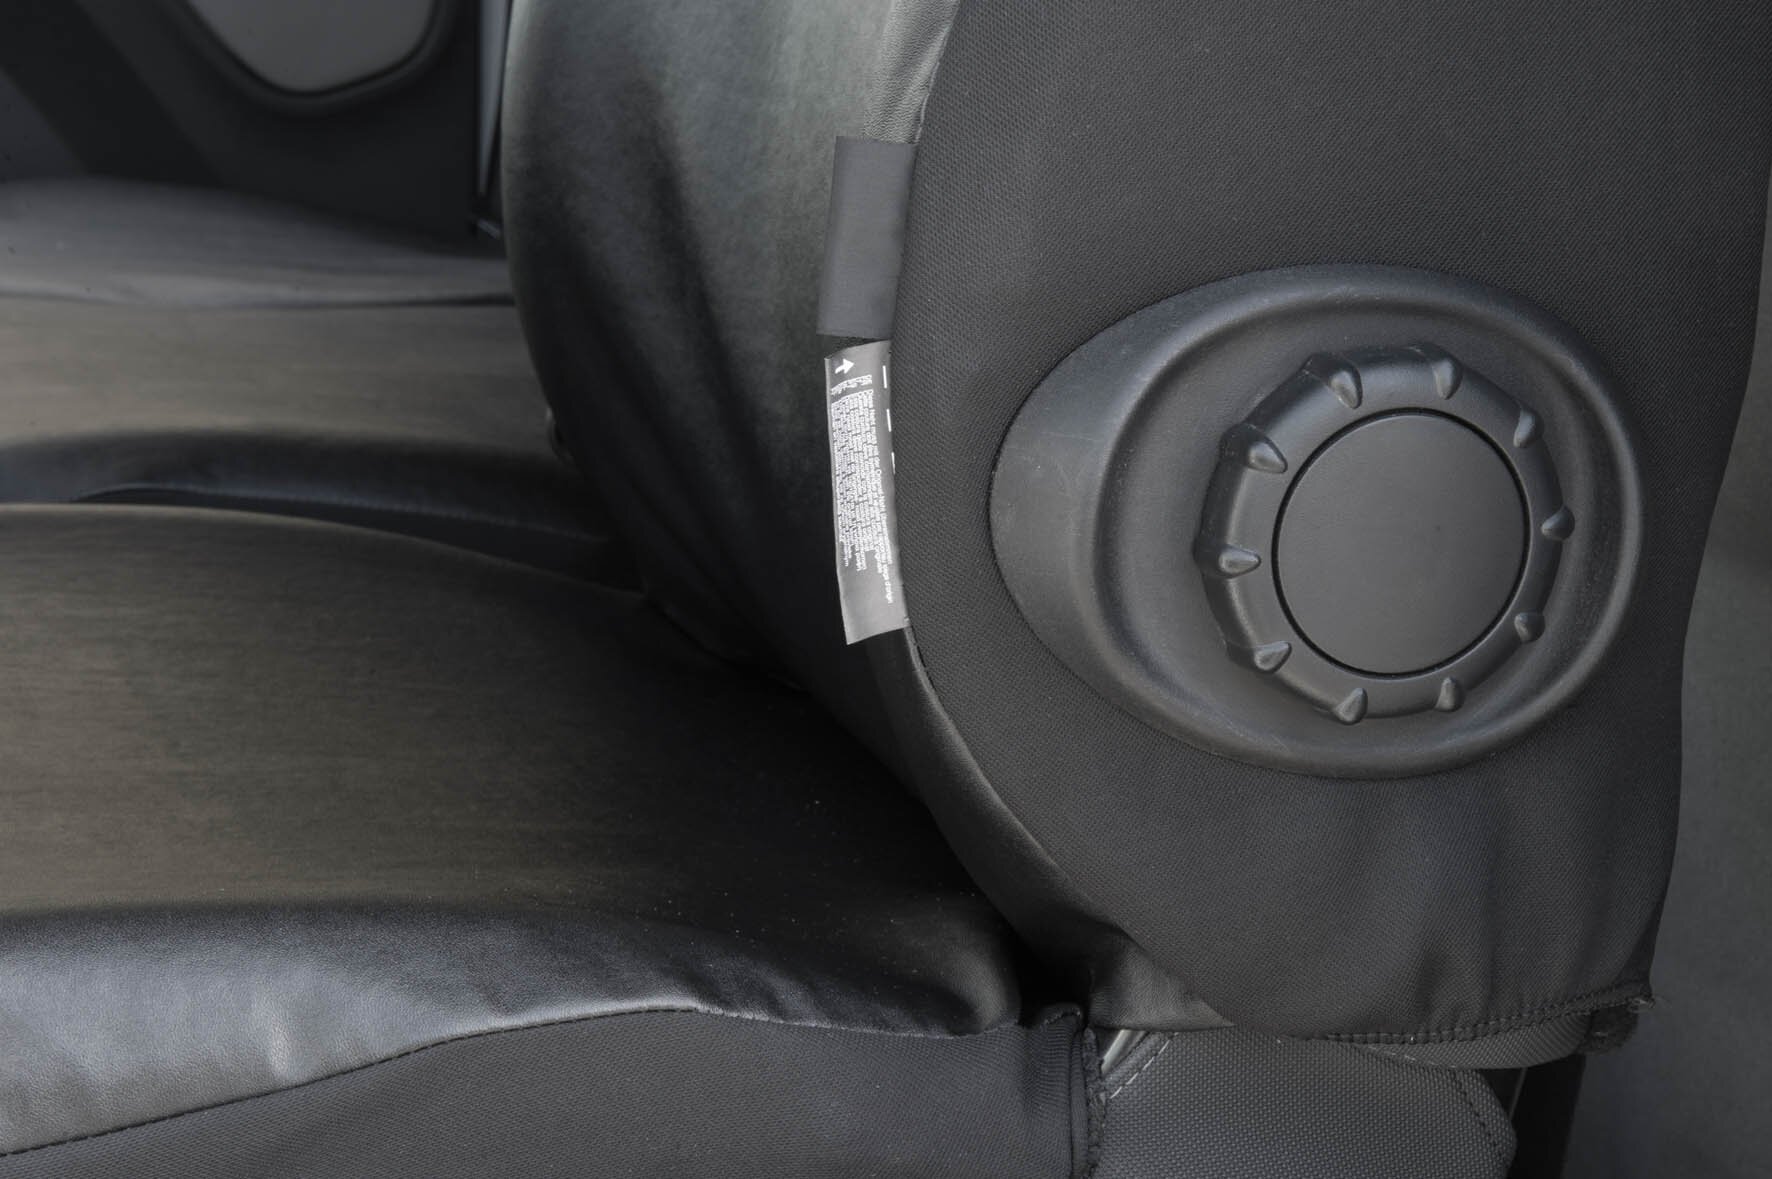 Housse de siège Transporter en simili cuir pour Opel Movano, Renault Master, Nissan Interstar, siège simple & double